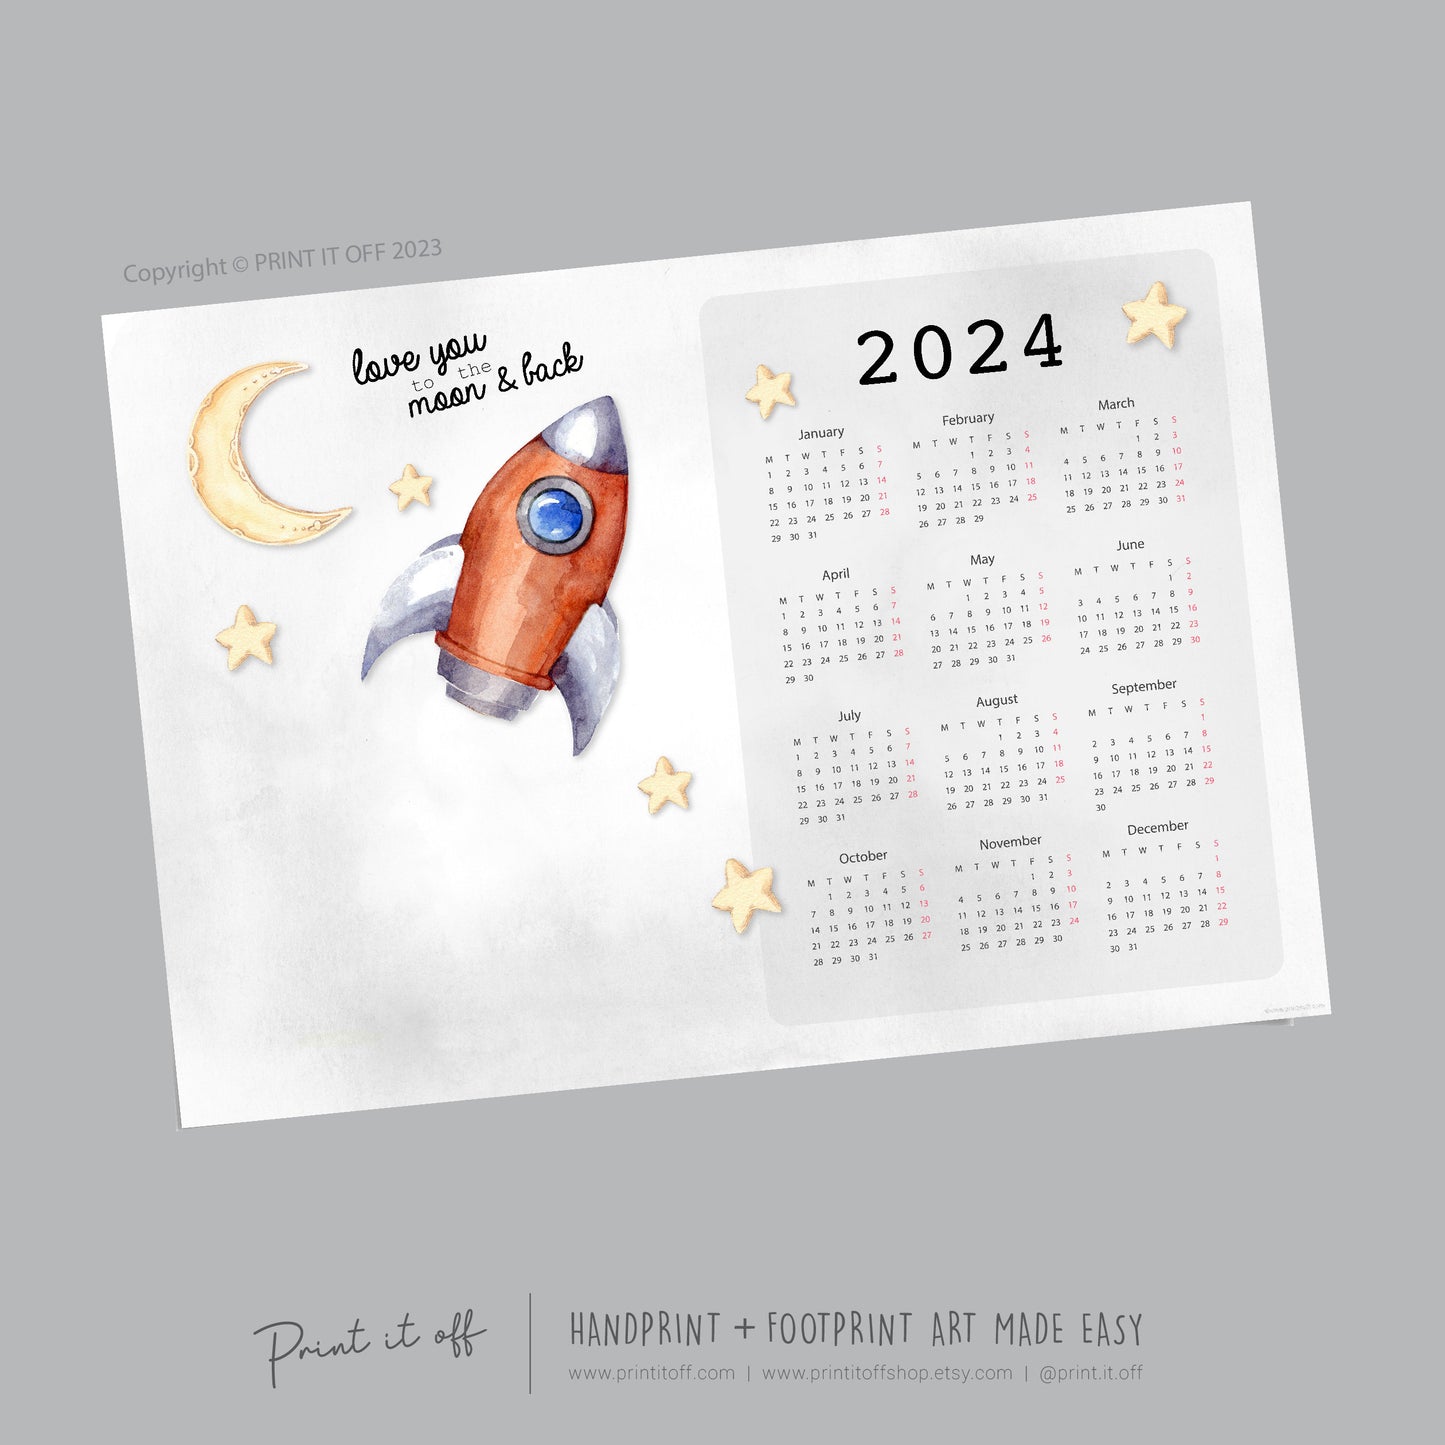 2024 Love You Moon & Back Rocket Calendar Year / Handprint Hand Art Craft / Activity DIY Gift Baby Child Toddler / Print It Off 0775